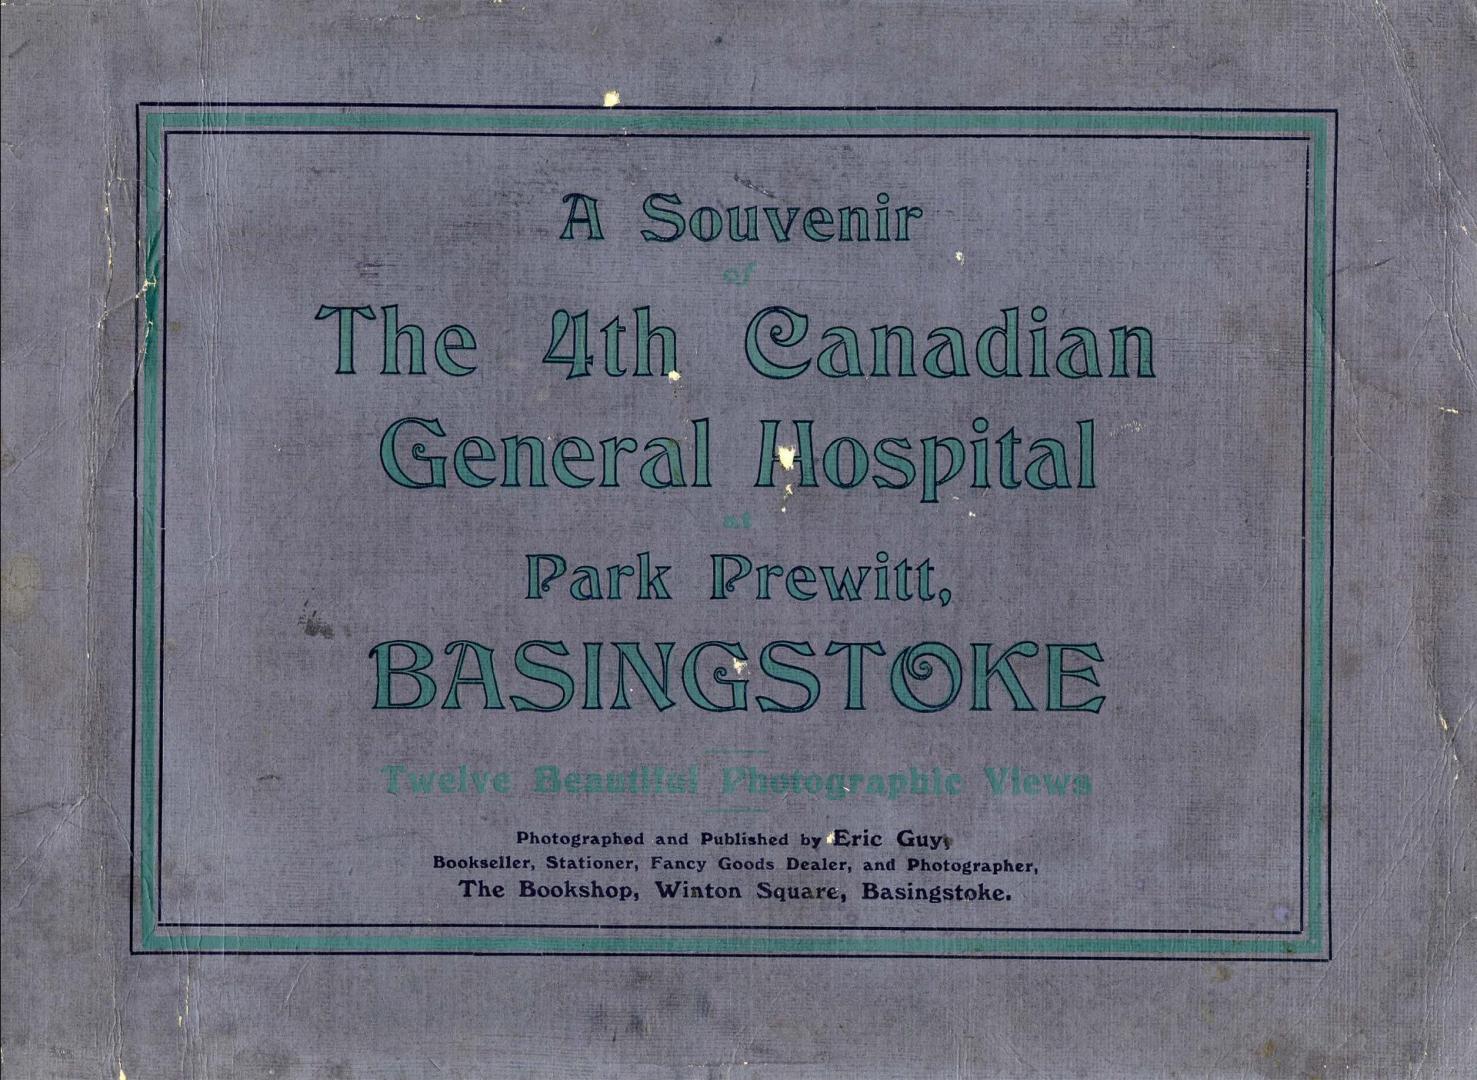 A souvenir : the 4th Canadian General Hospital, Park Prewitt, Basingstoke